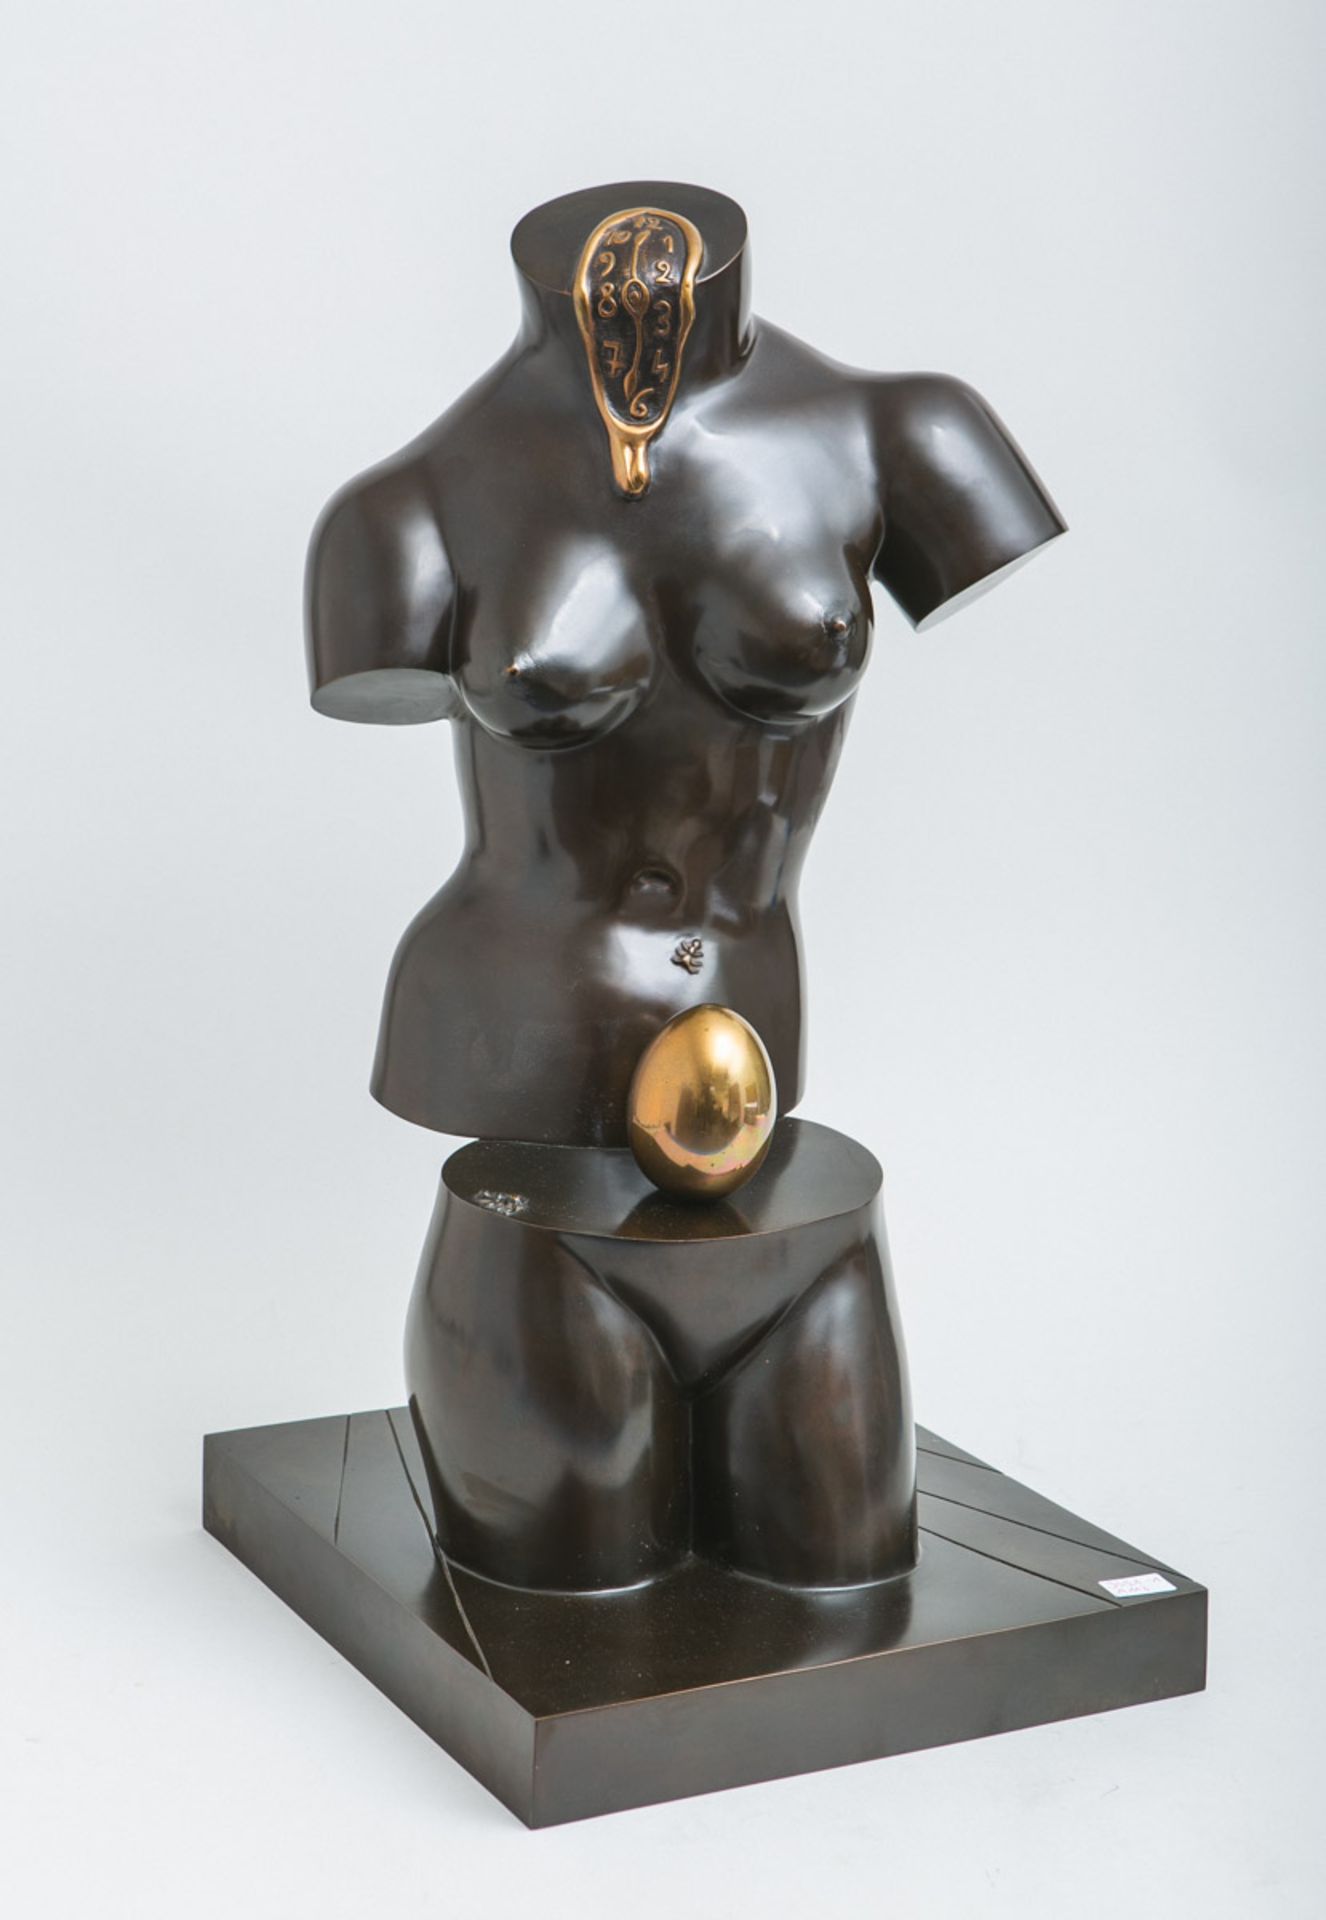 Dali, Salvador (1904 - 1989) "Space Venus" (1984)